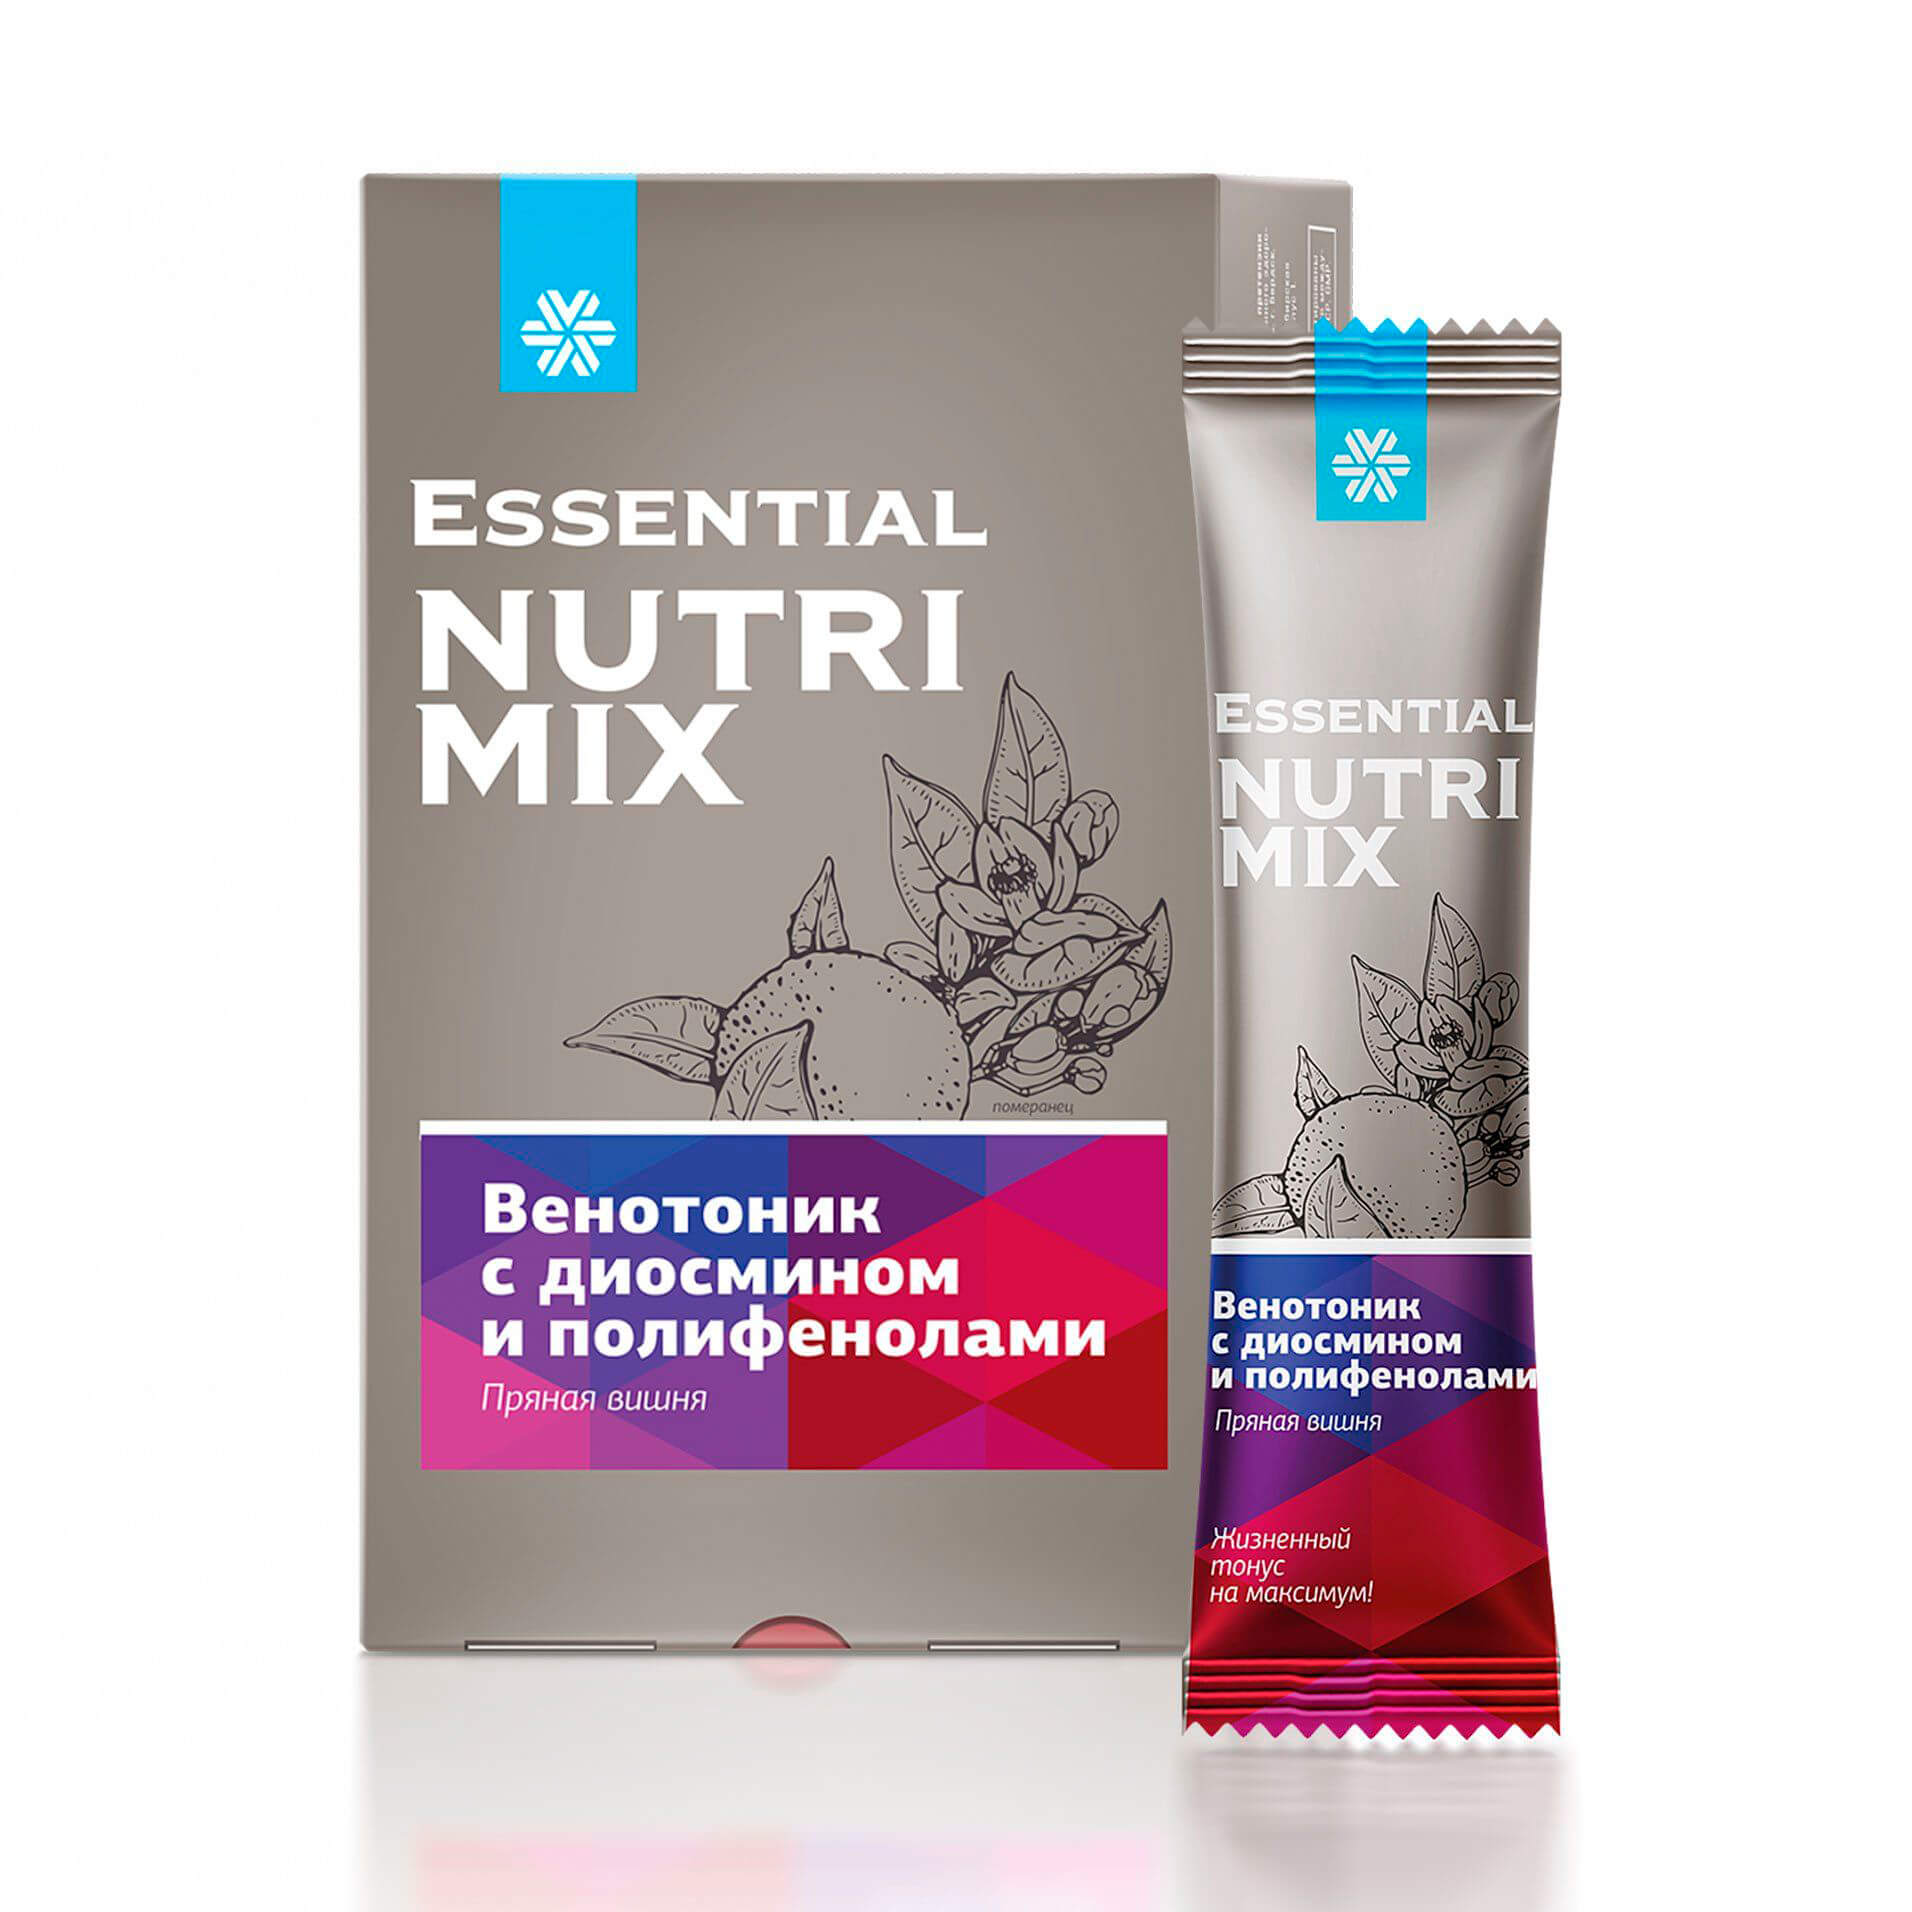 Essential Nutrimix - Диосмин және полифенолы бар венотоник (ащы шие)